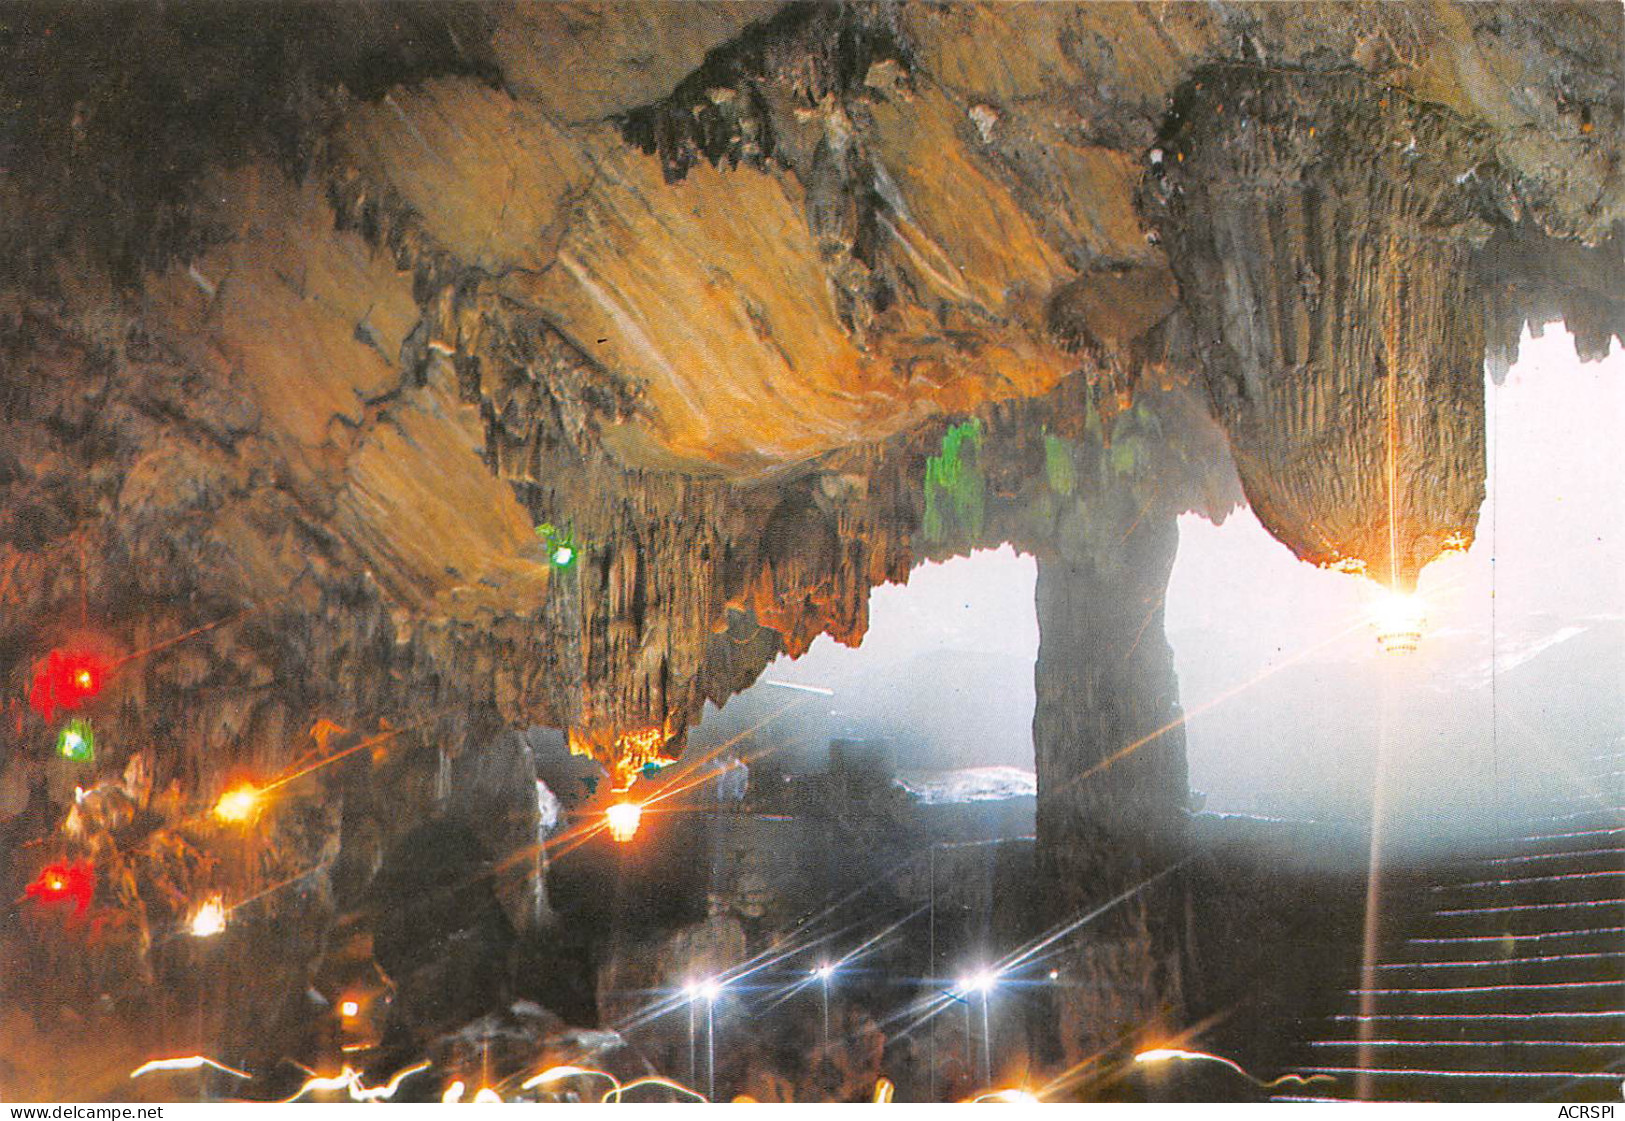 CHINE China 中国  ZHANGGONG Cave In YIXING  5 (scan Recto Verso)MF2724TER - China